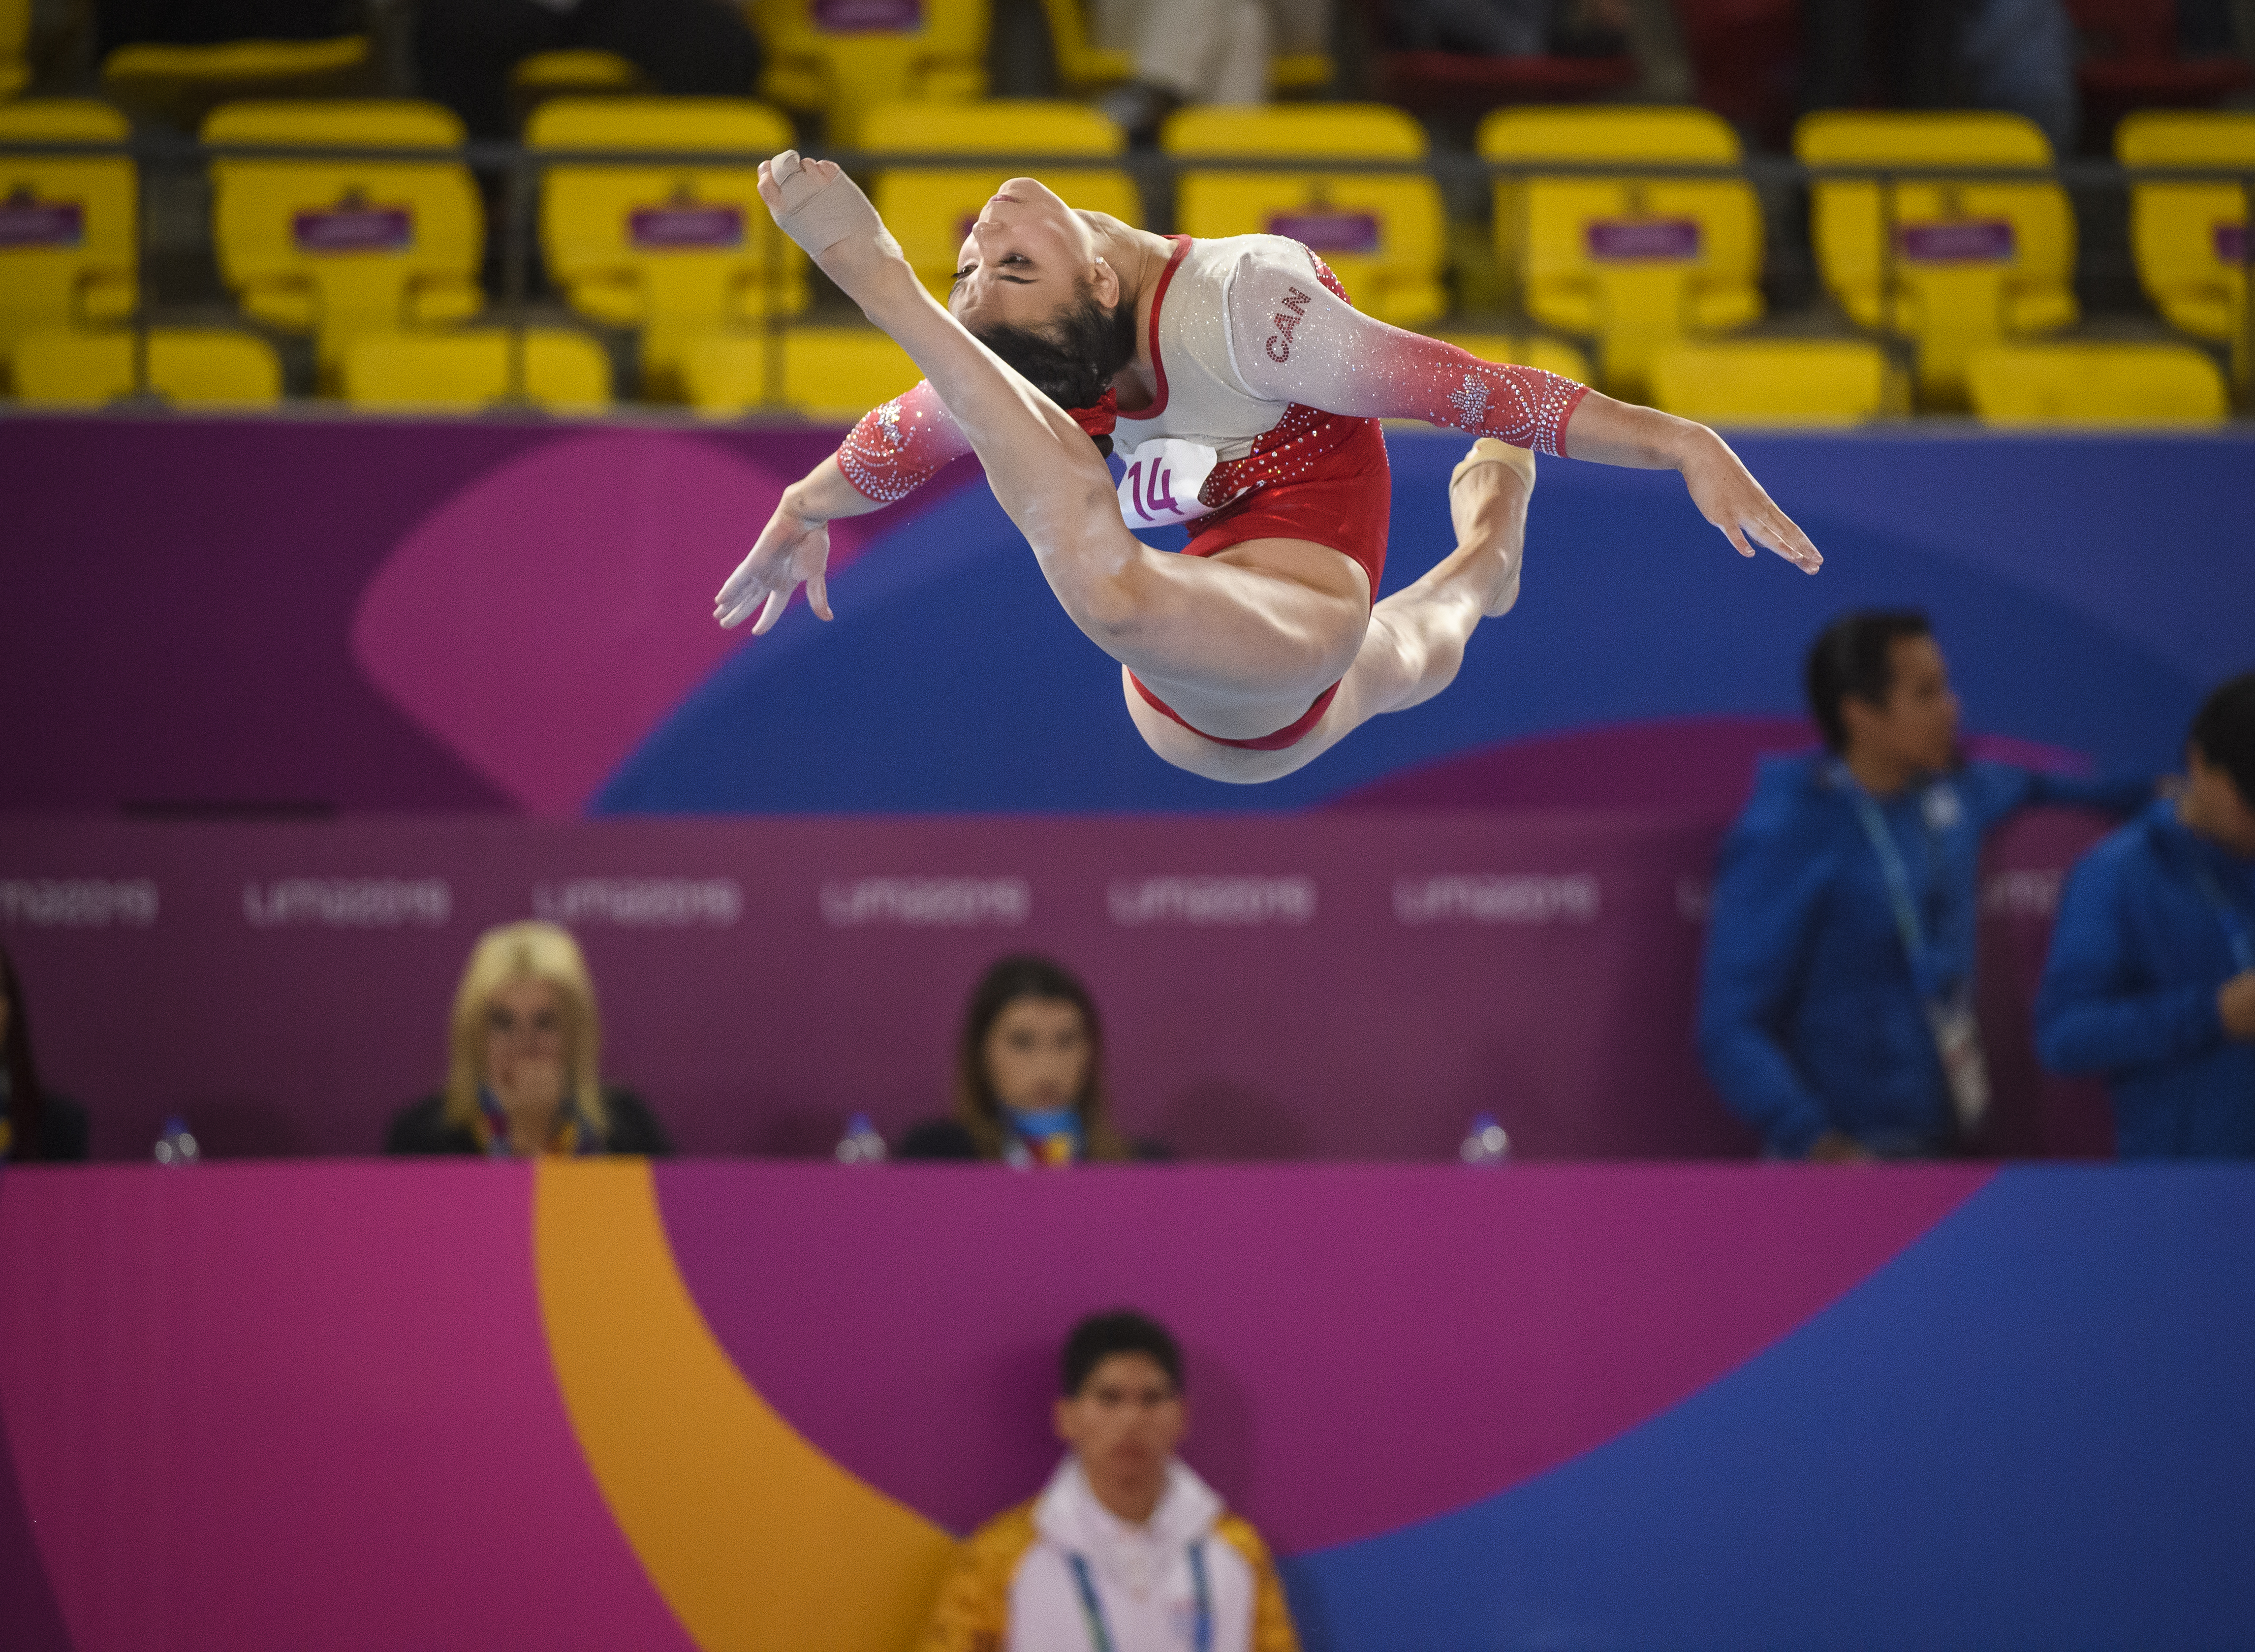 Brooklyn Moors of Canada competes in artistic gymnastics